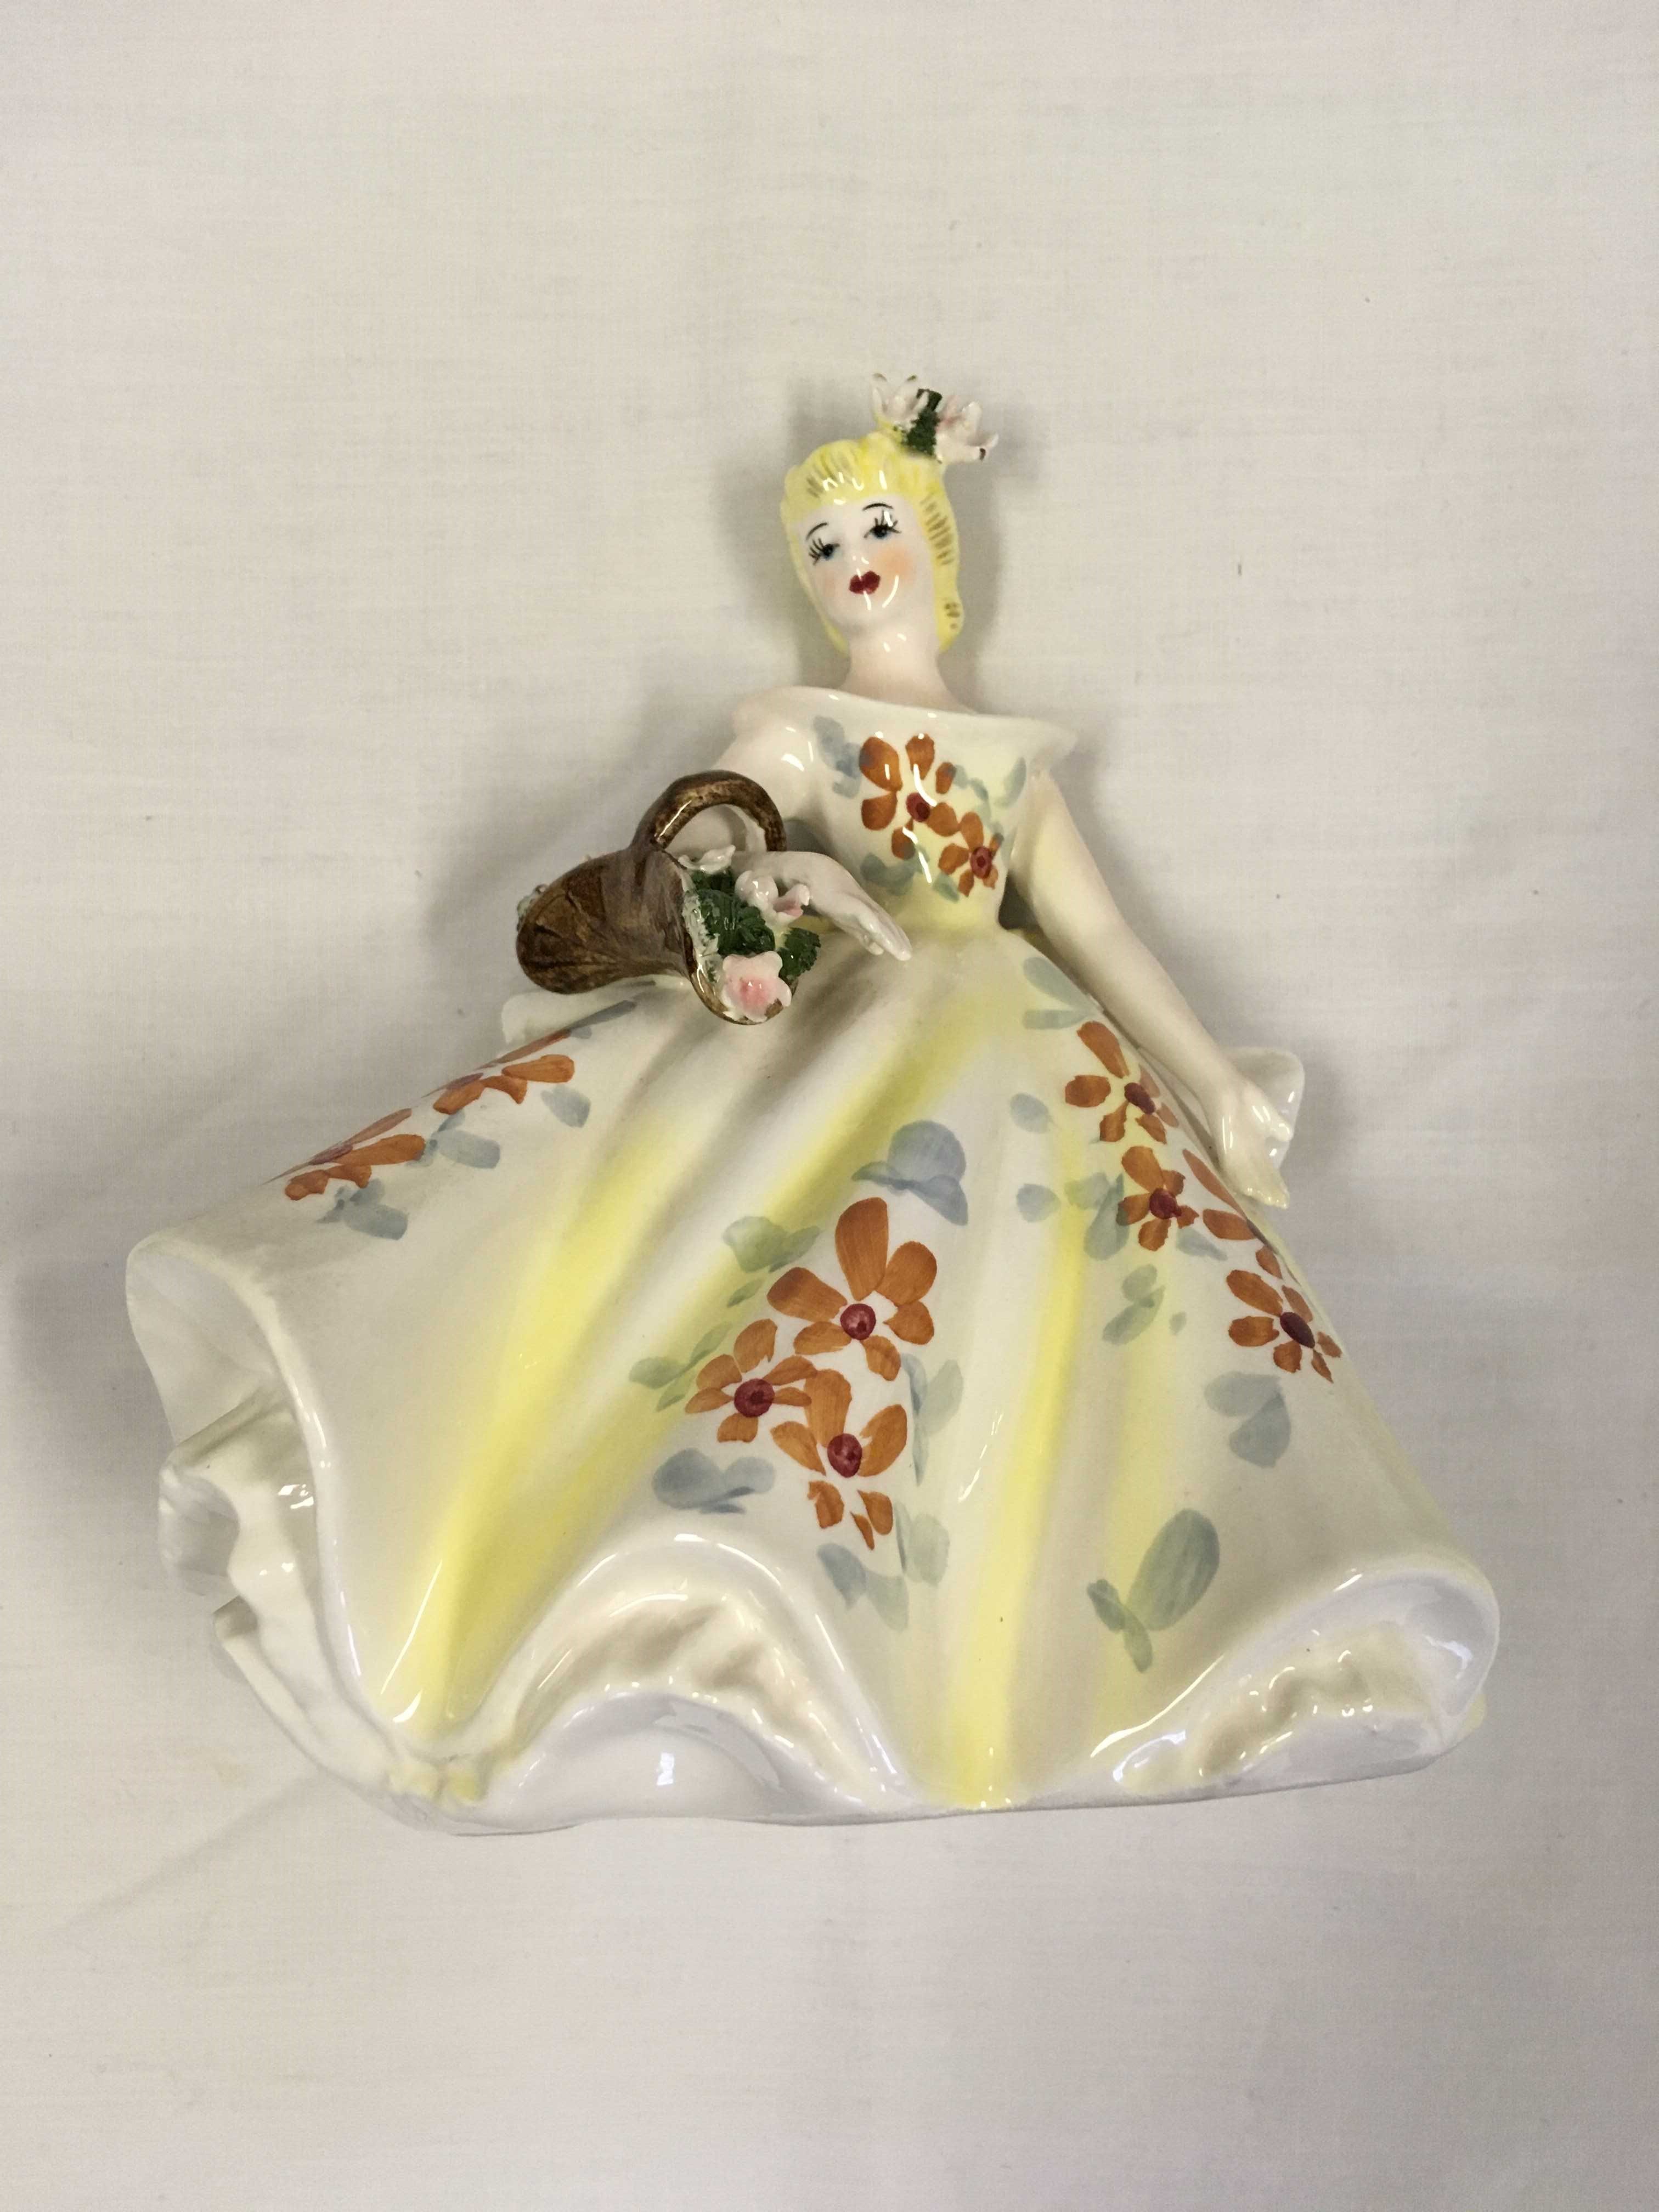 Lady in yellow figurine